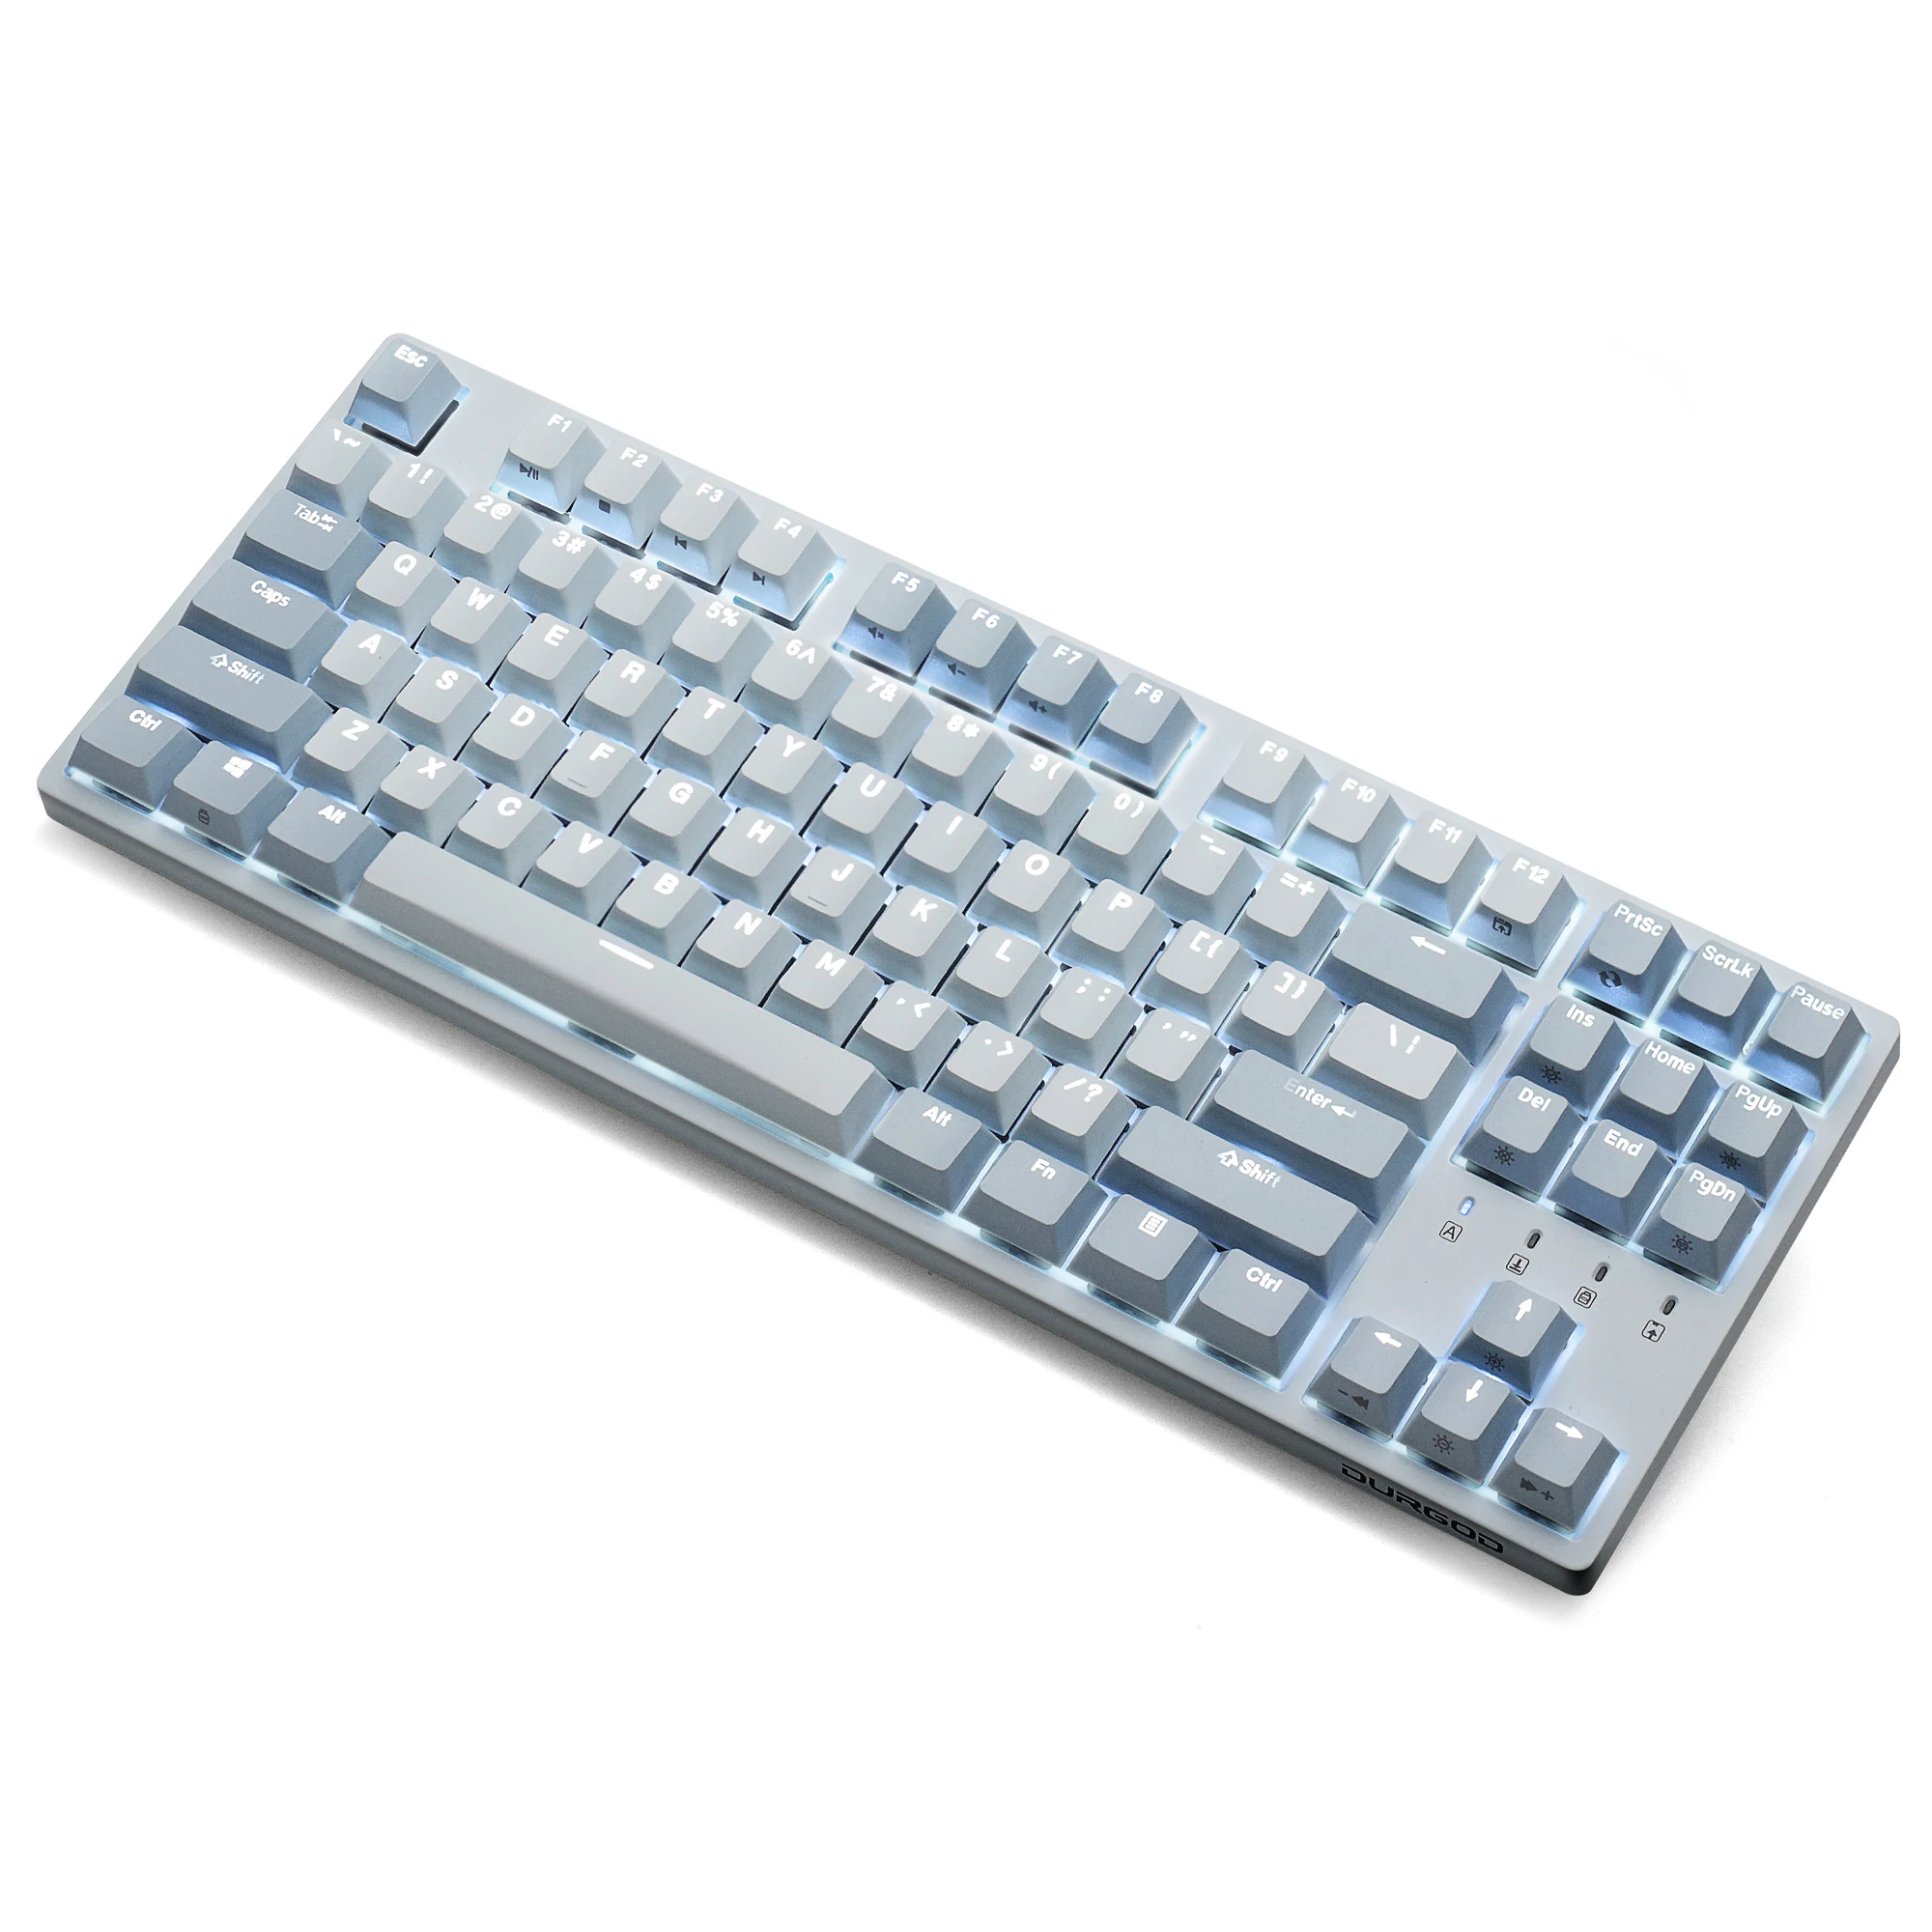 DURGOD Taurus K320 Mechanical Keyboard, Wired LED Keyboard - Cherry MX Brown Switch Anti-ghosting 87Keys US Layout (QWERTY)